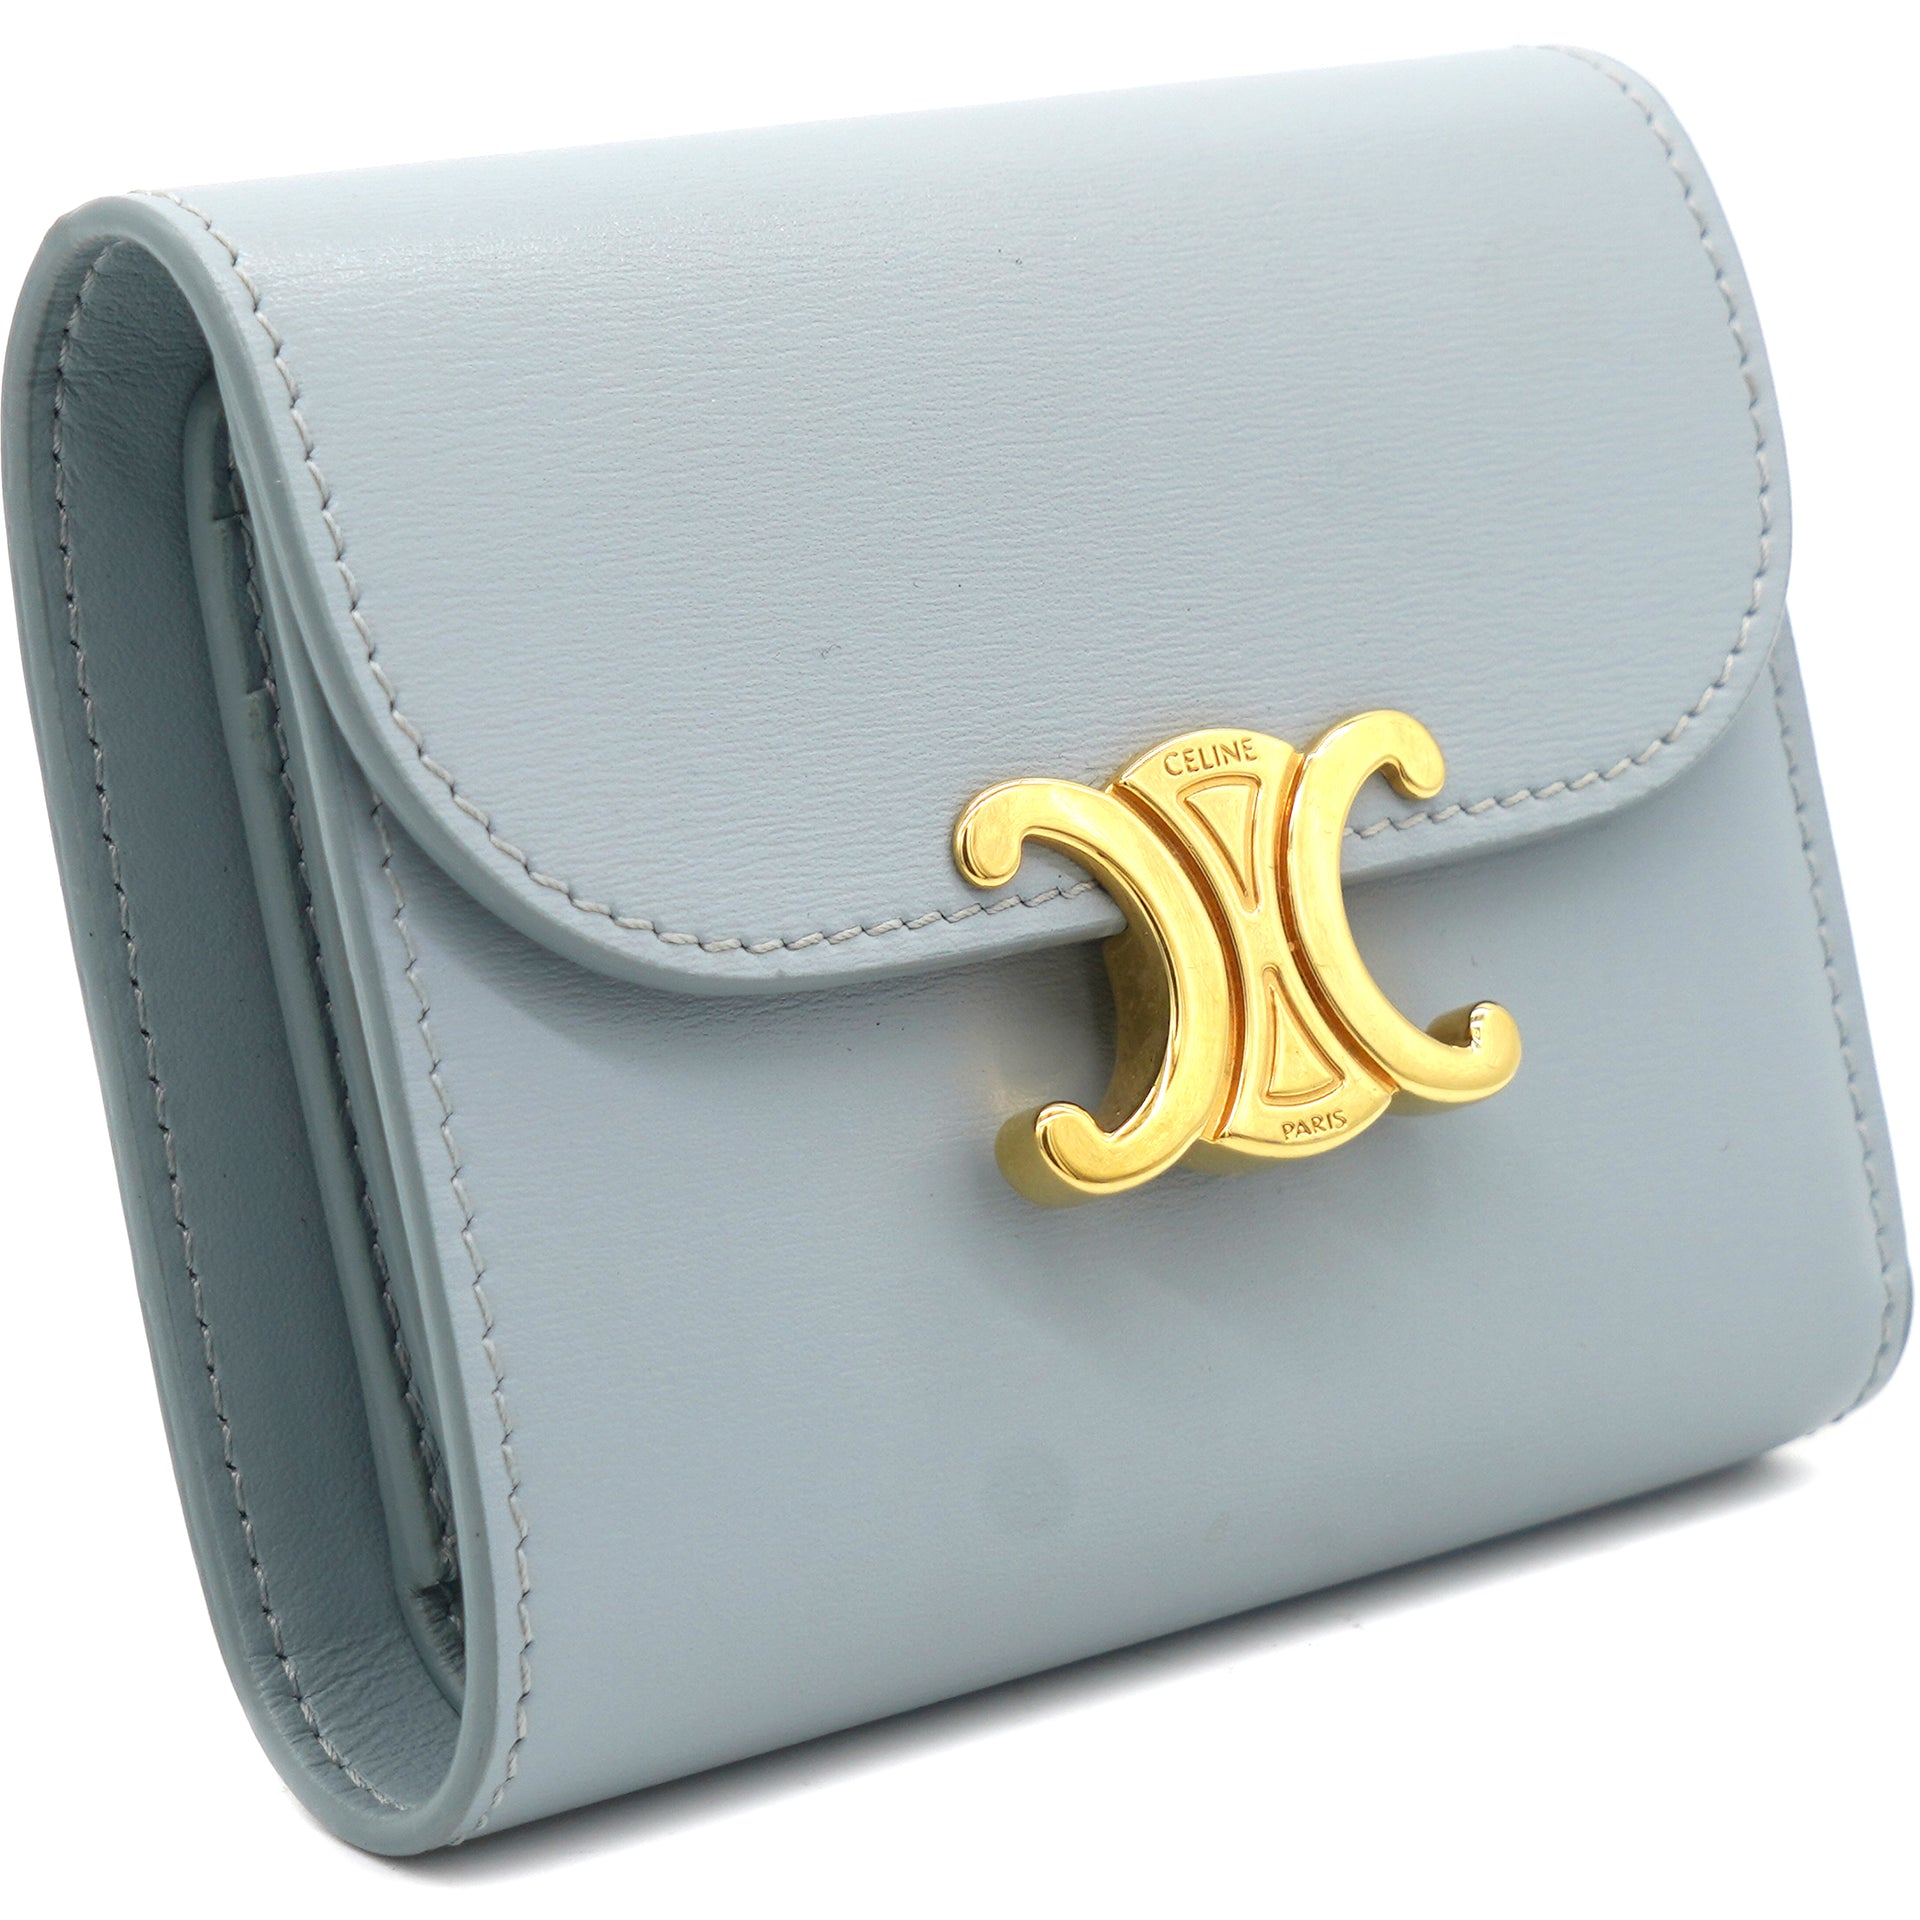 Women's Triomphe compact wallet in shiny calfskin, CELINE